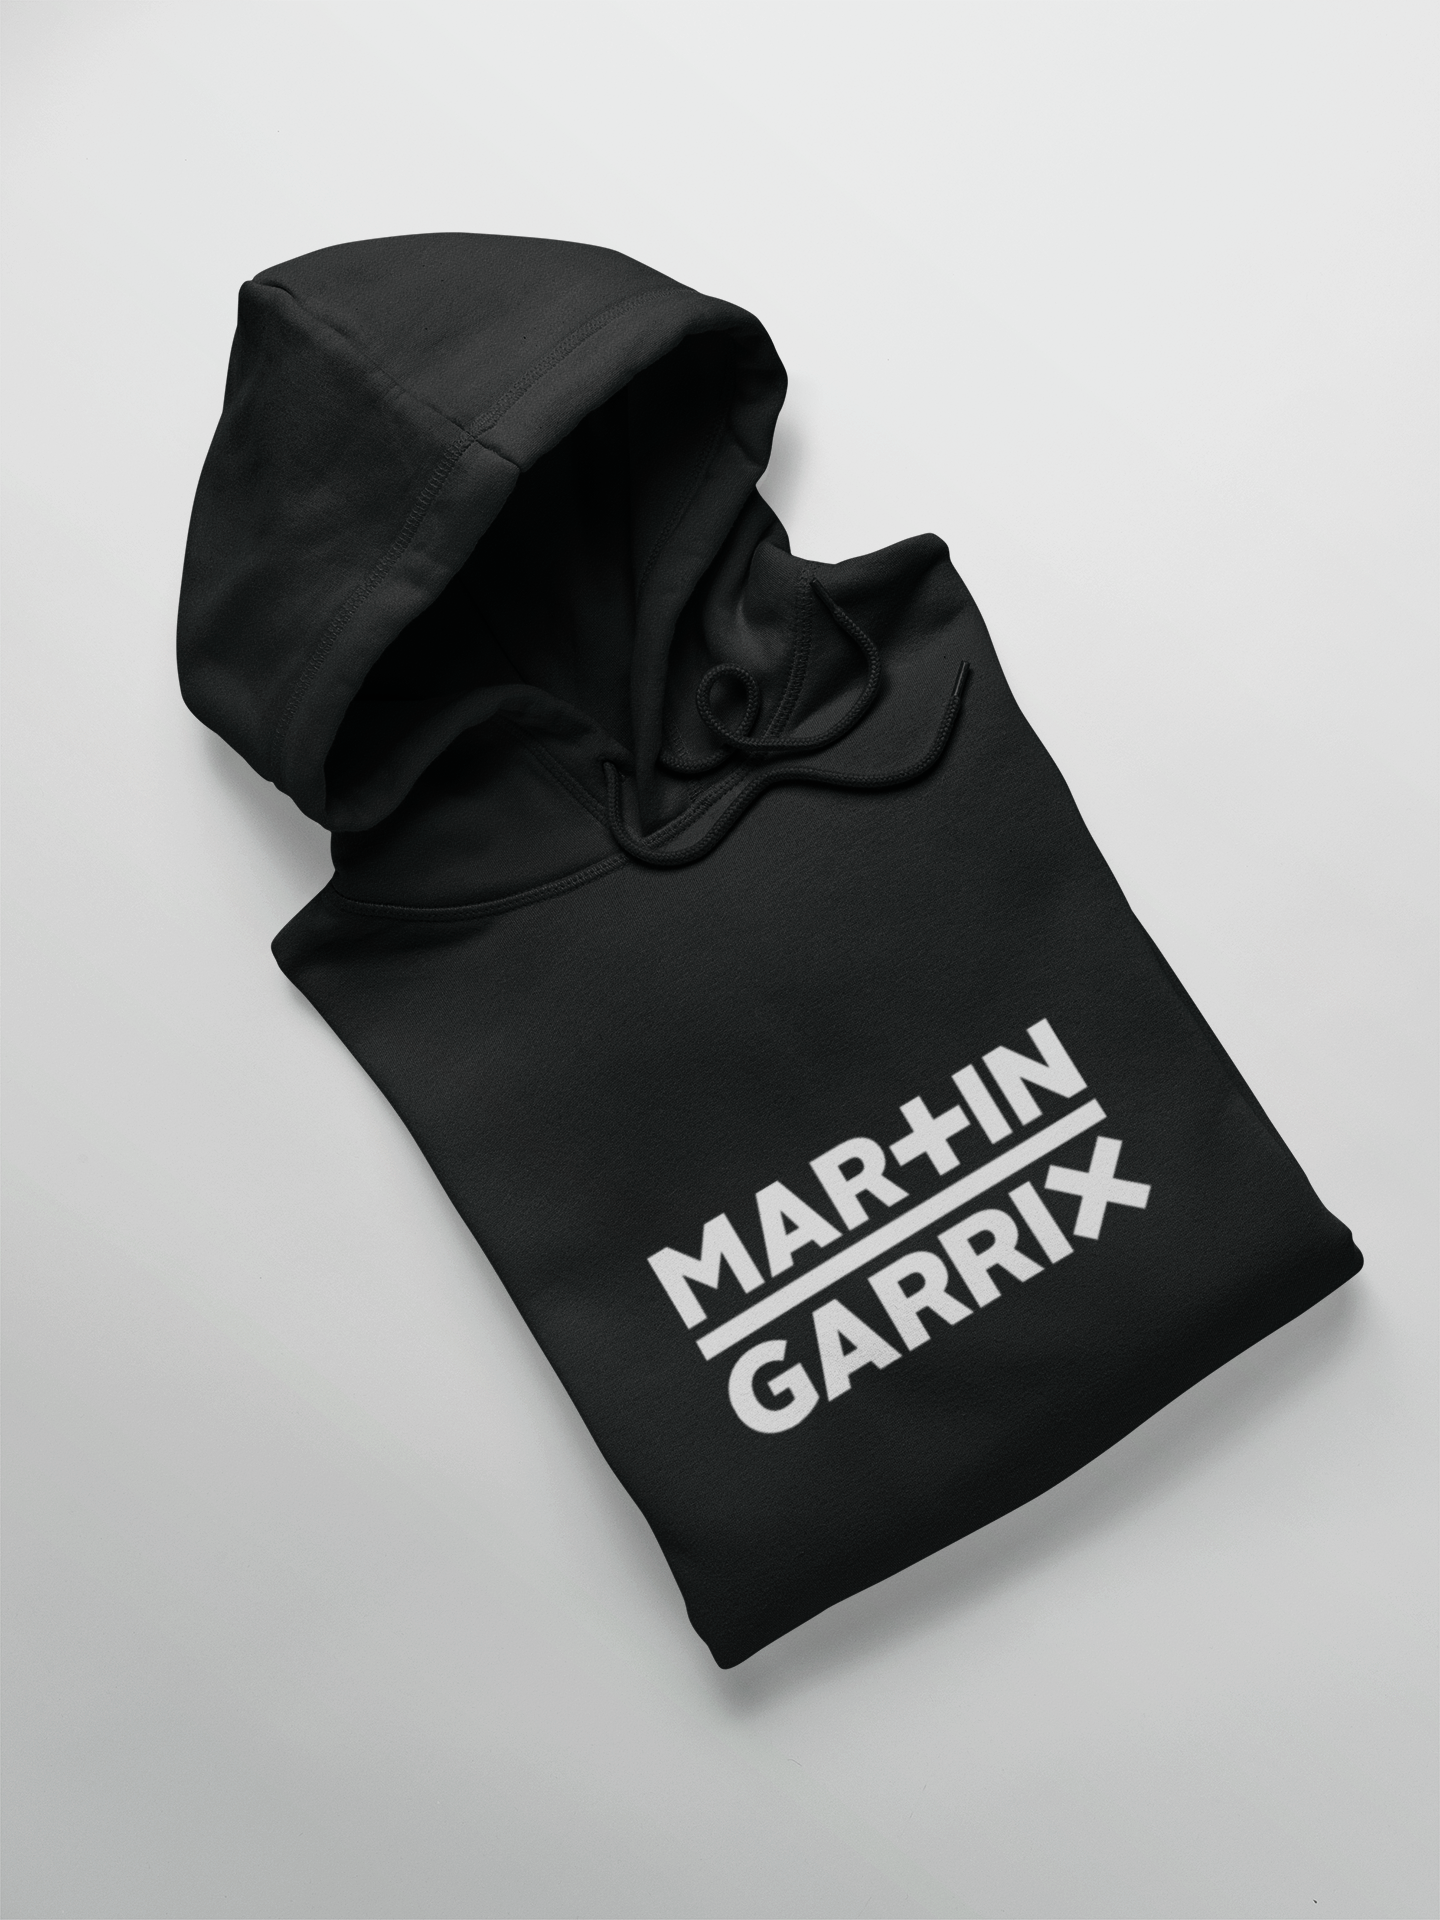 Martin Garrix old logo tattoo, what u think guys ? : r/Martingarrix